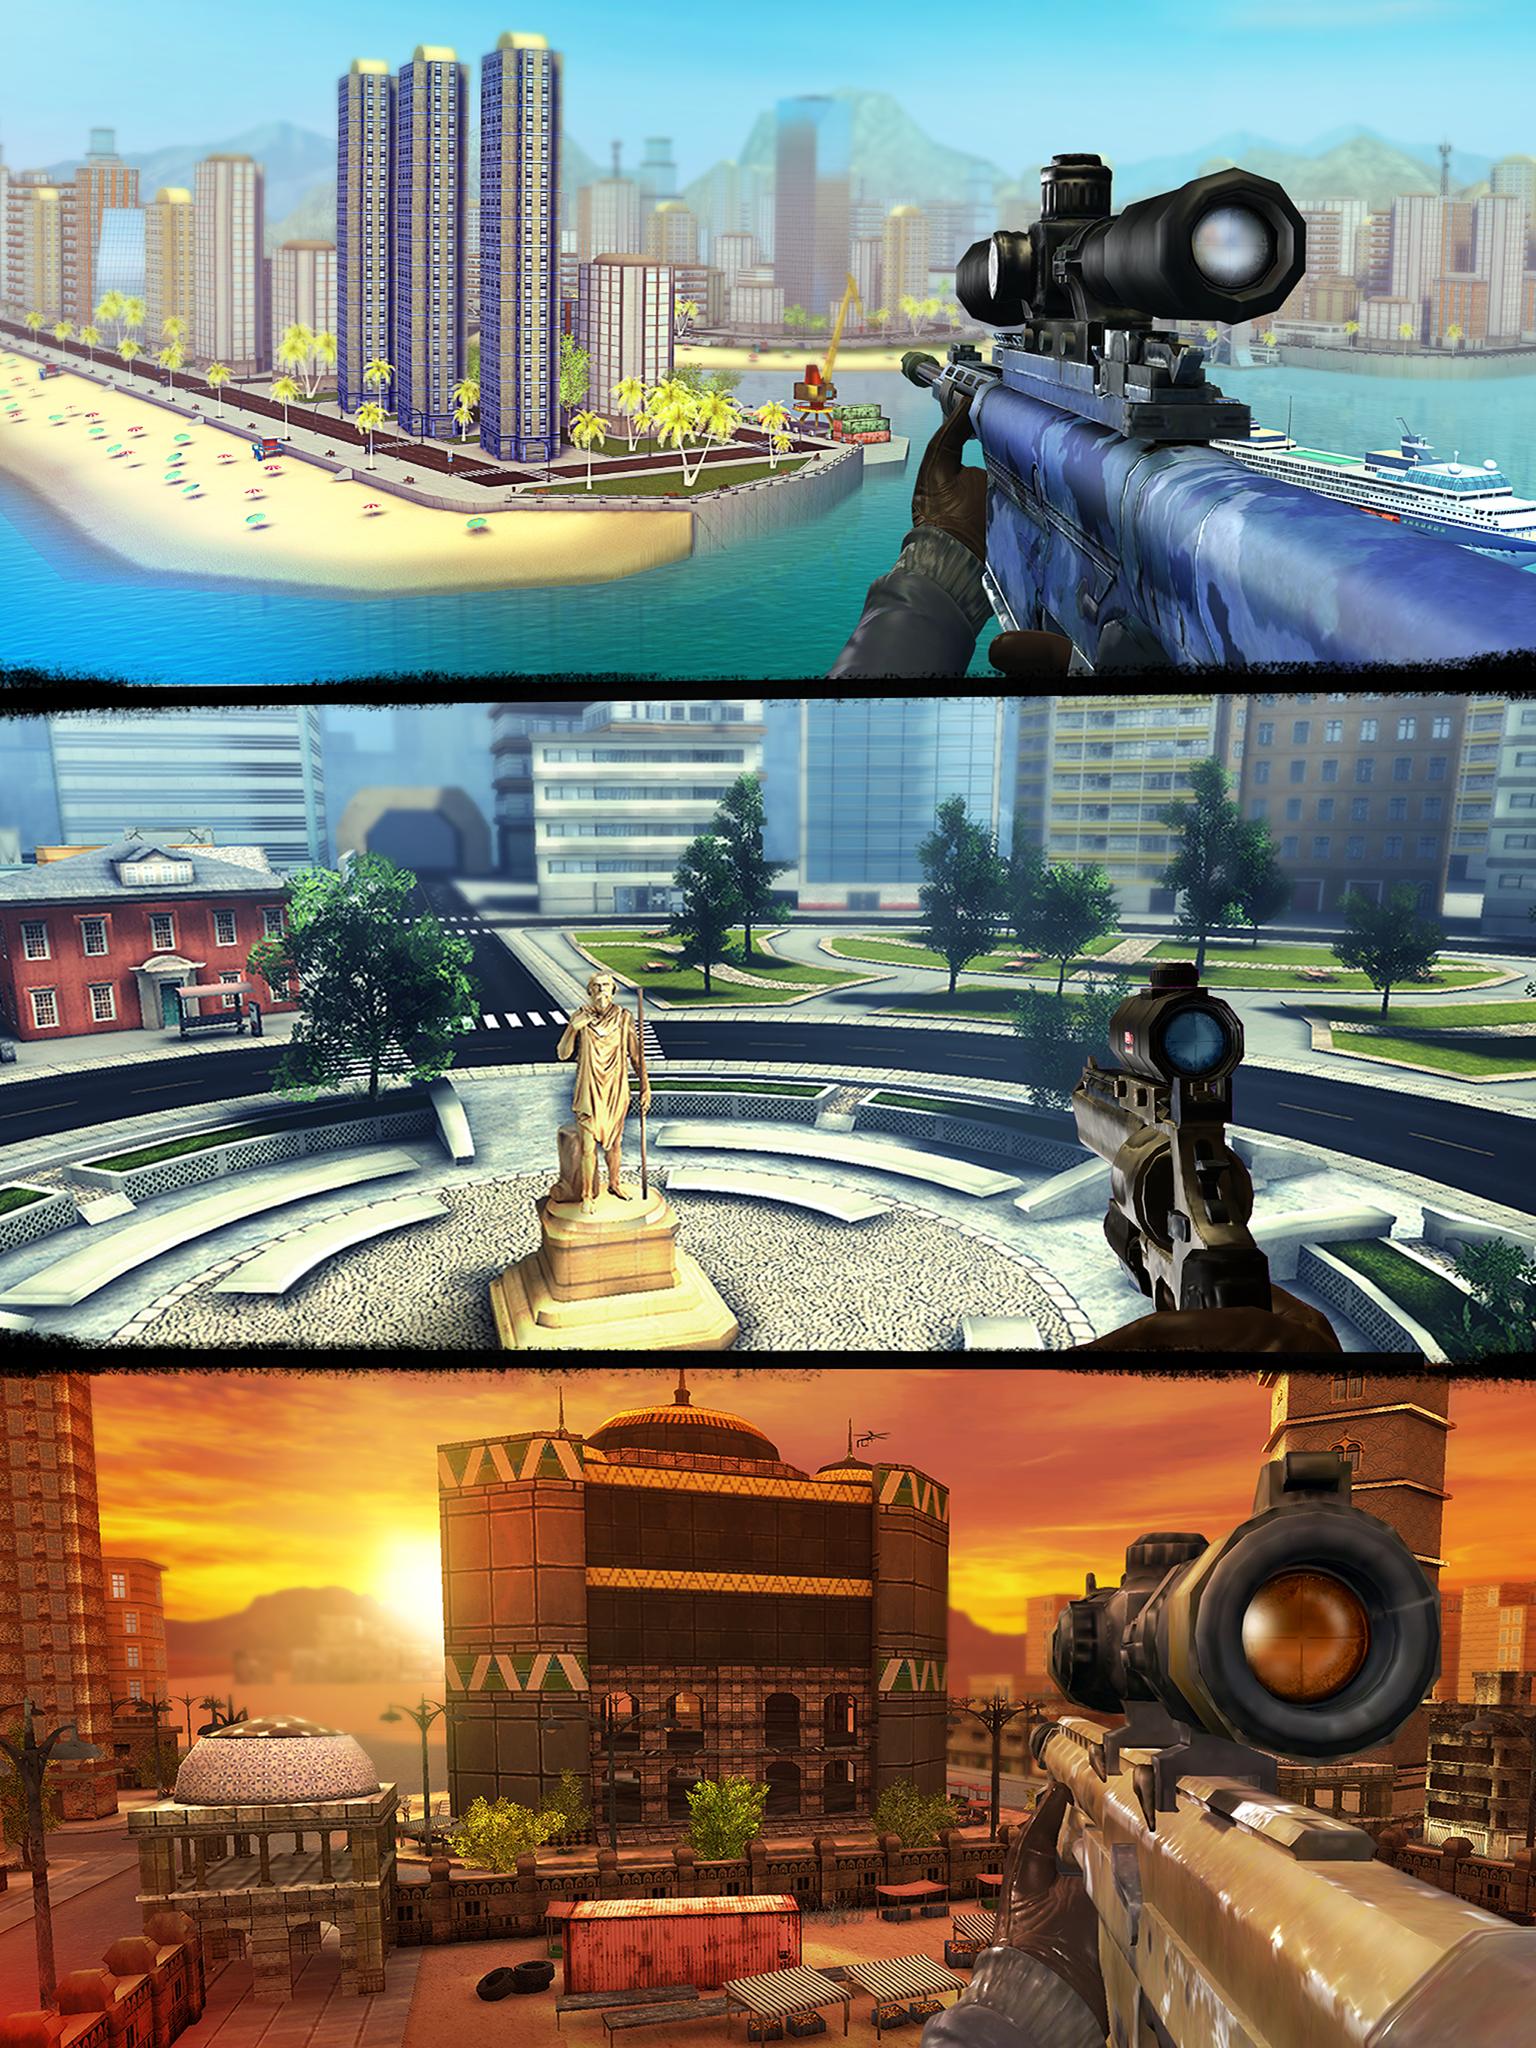 Sniper 3D Fun Free Online FPS Shooting Game 3.15.1 Screenshot 13